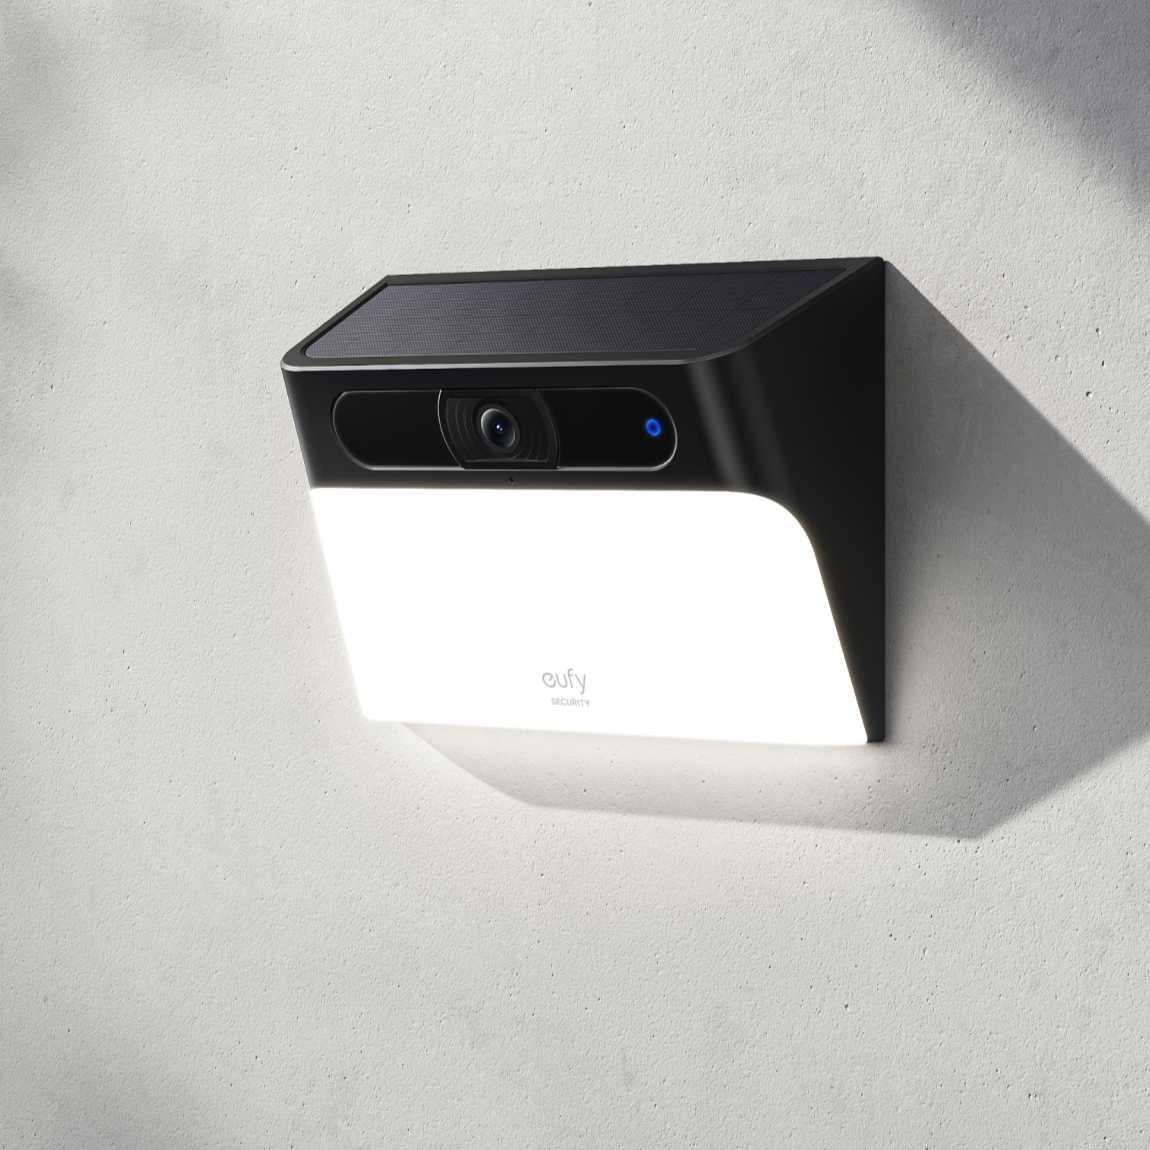 Eufy Security Wall-Lightcam S120